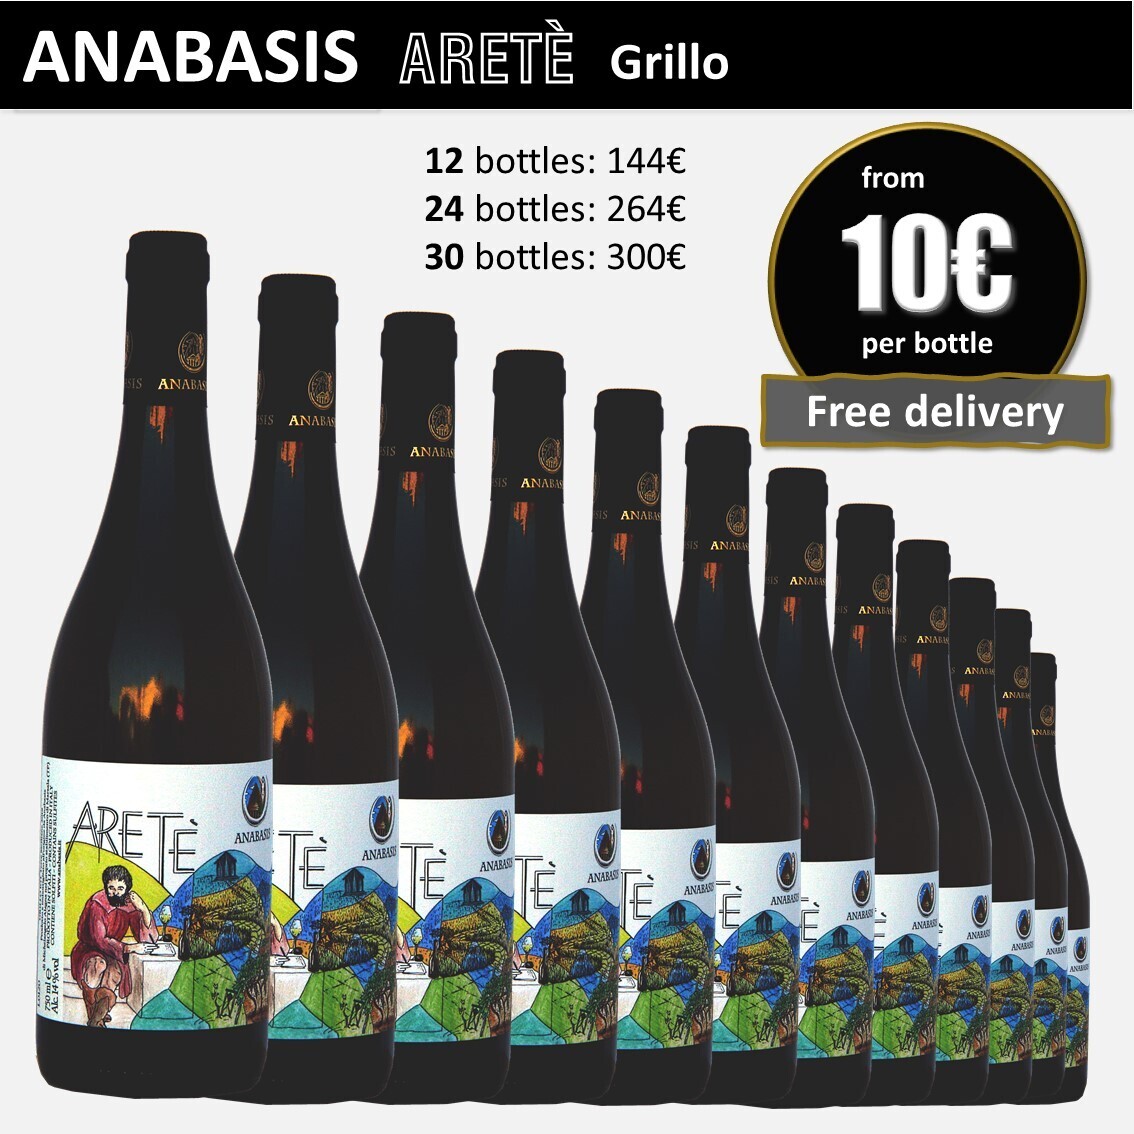 ANABASIS ARETÈ Grillo white 12 bottles